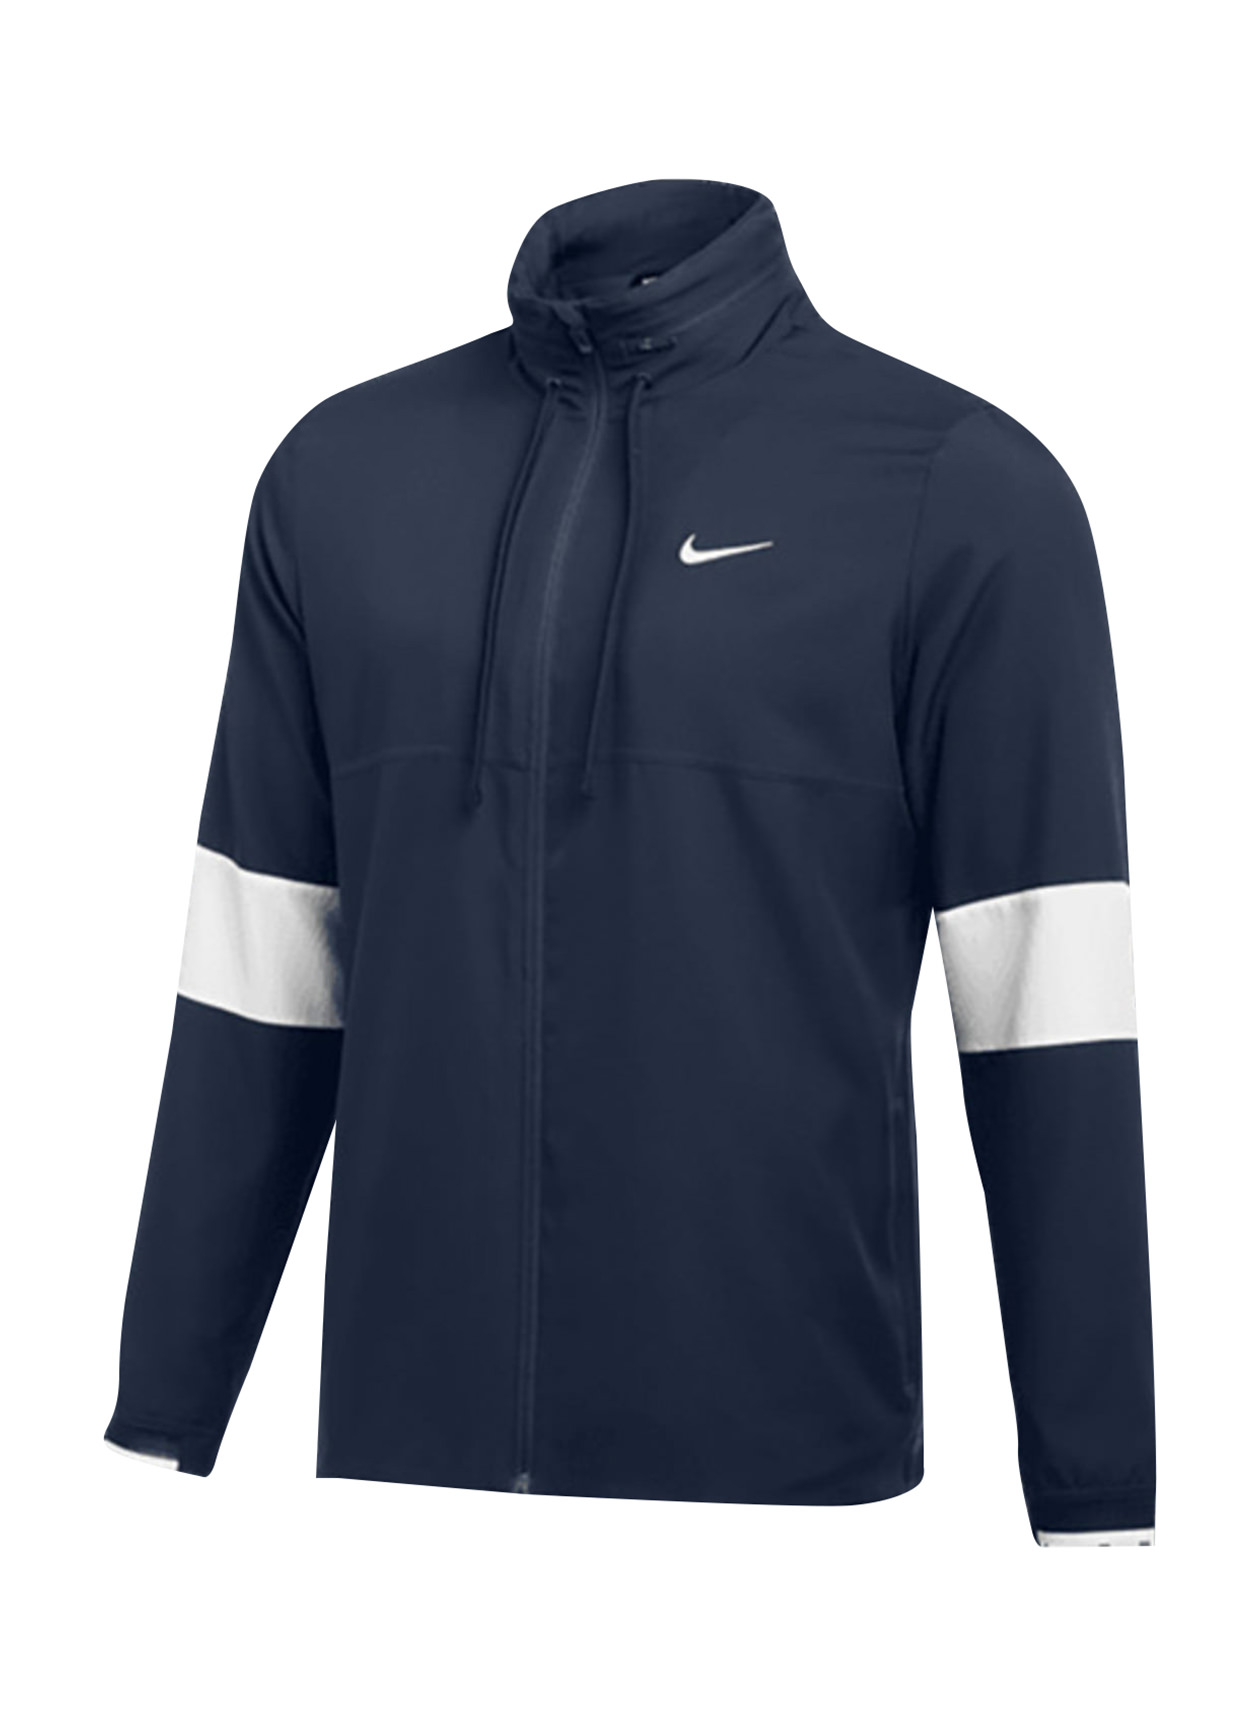 Branded Nike Men's Team Navy-White Dri-FIT Training Jacket | Custom Jacket